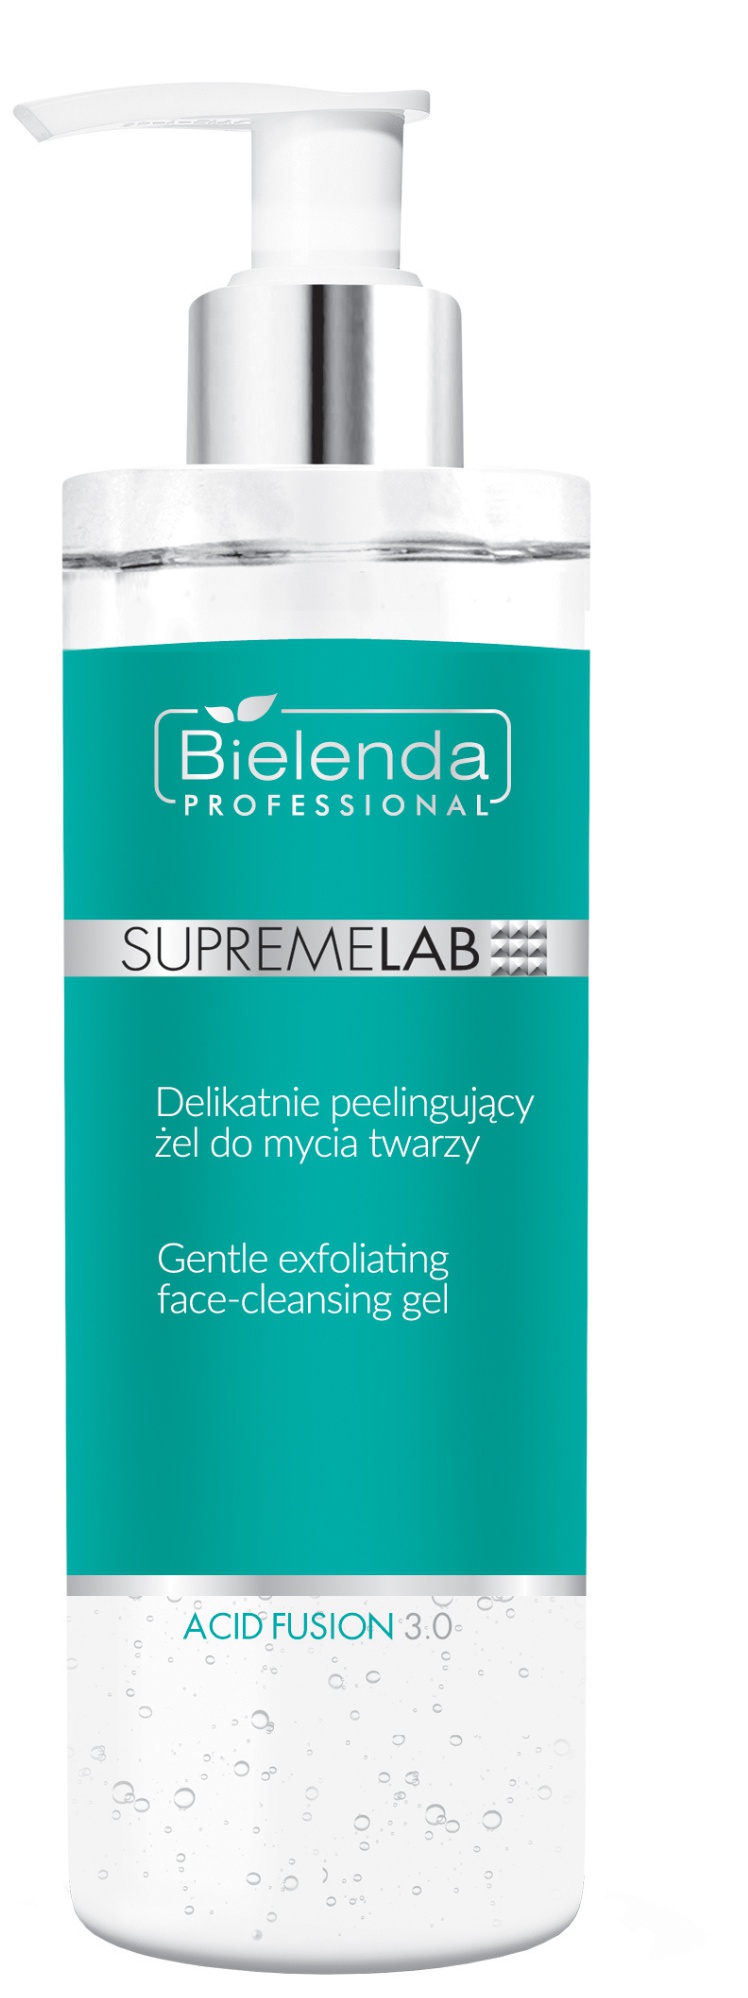 Bielenda Professional Supremelab Acid Fusion 3.0 Gentle Exfoliating Face Cleansing Gel